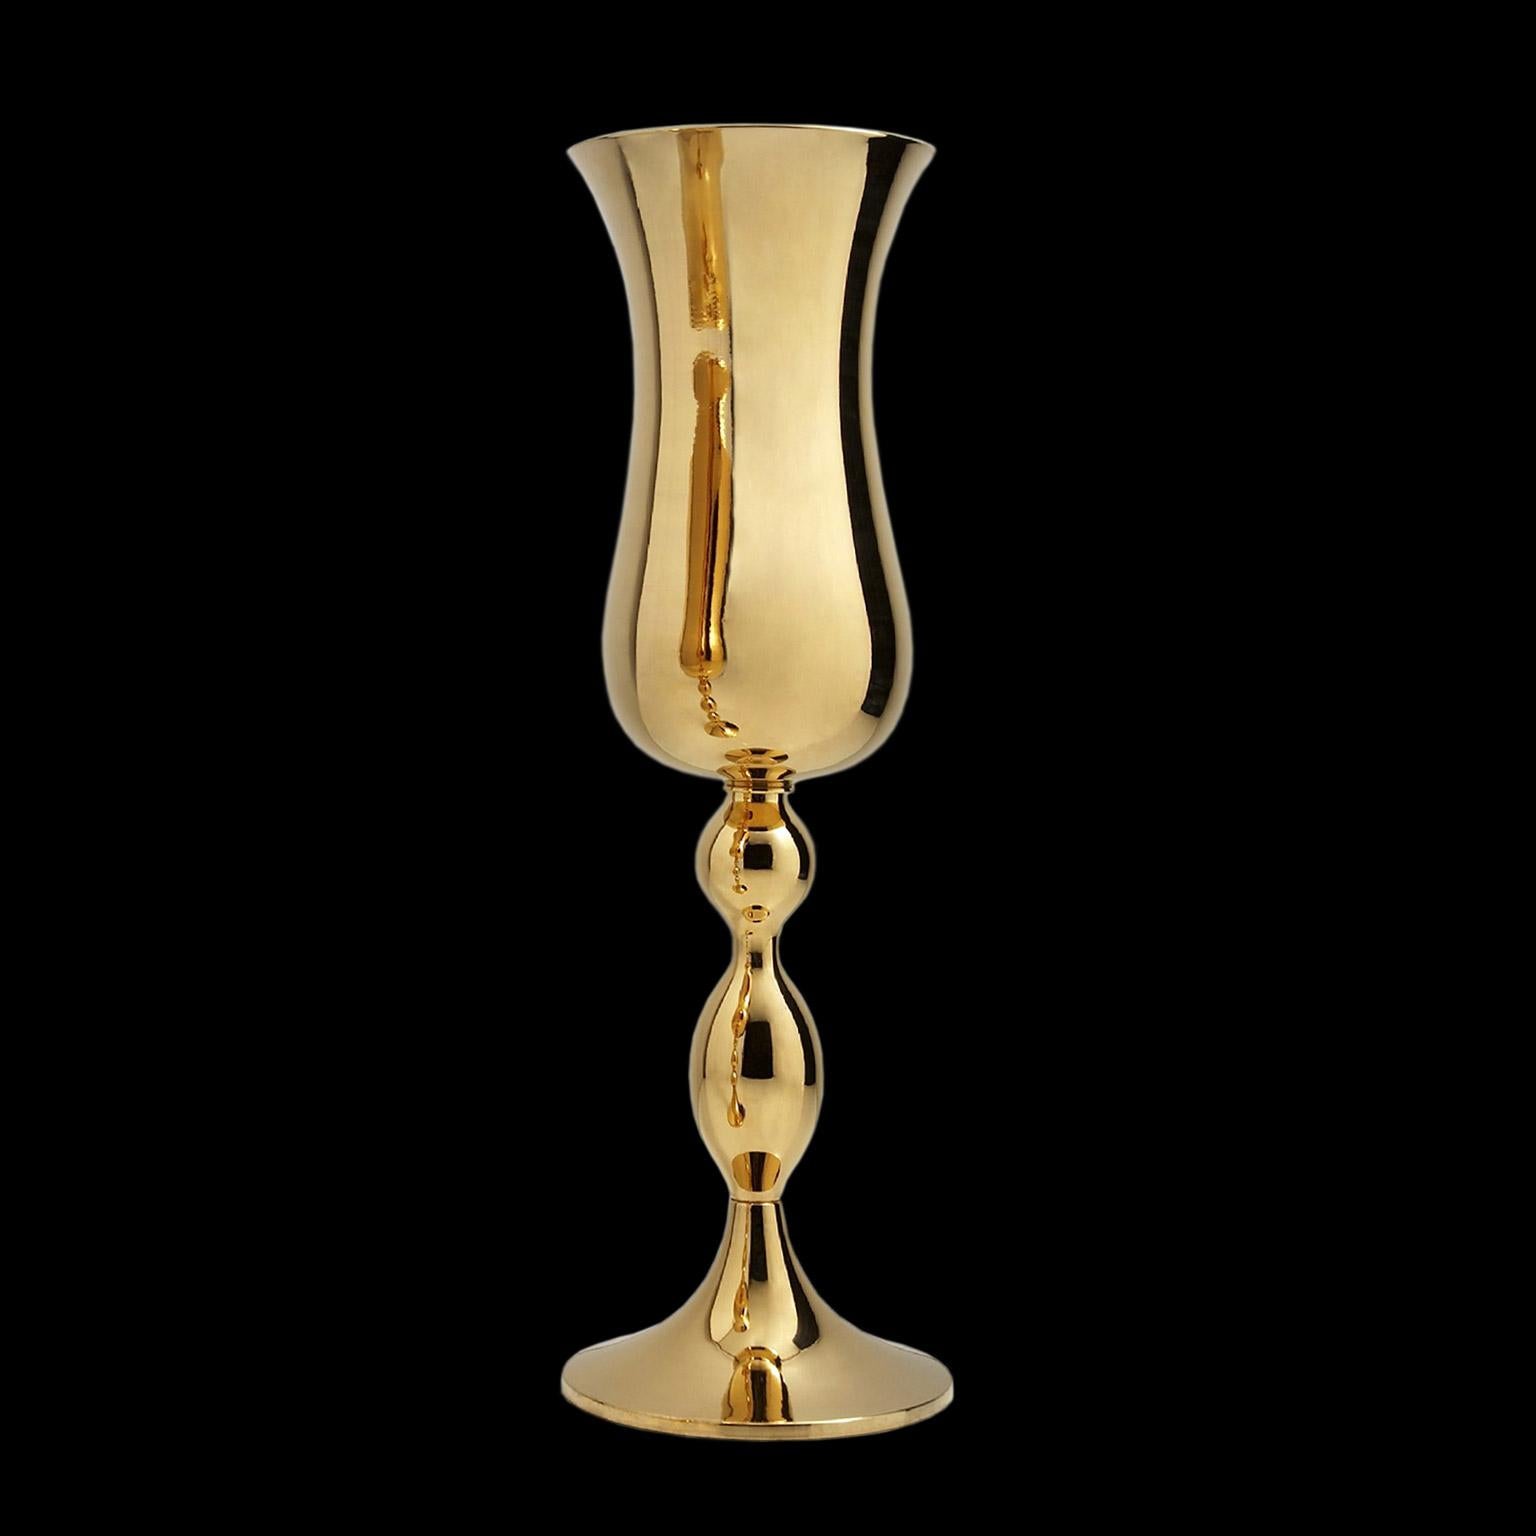 Ceramic vase BOB handcrafted in 24-karat gold outside, white glazed inside
cod. CP005

measurers: Height 107.0 cm. - diameter 30.0 cm.
